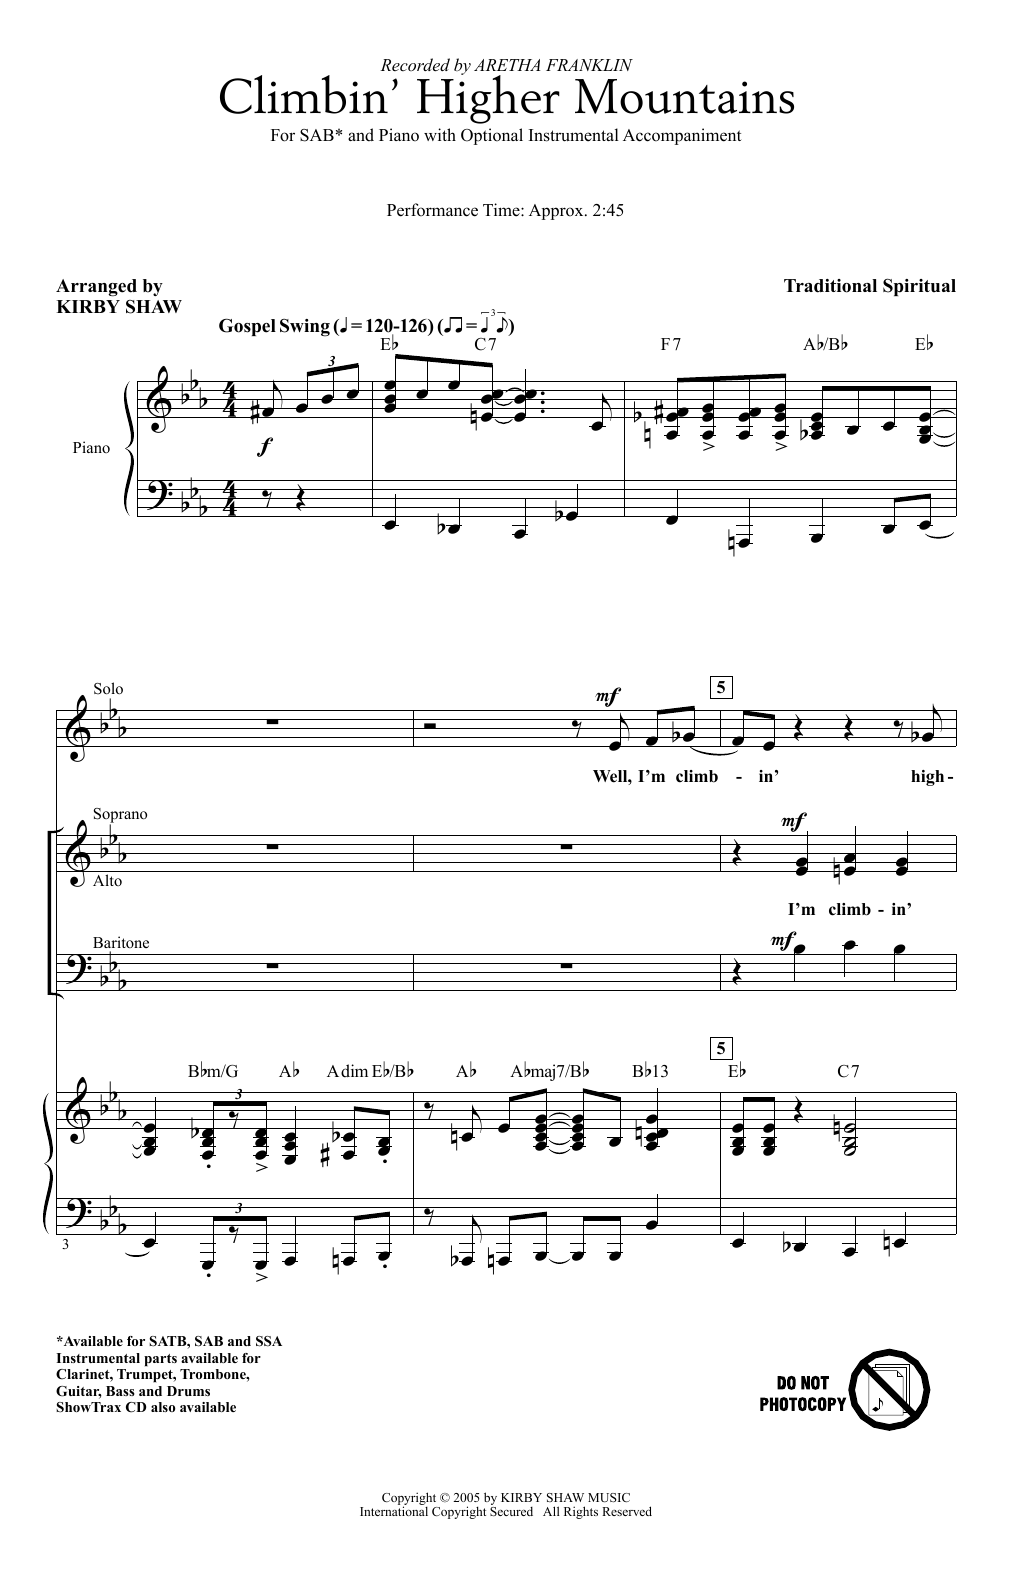 Aretha Franklin Climbin' Higher Mountains (arr. Kirby Shaw) Sheet Music Notes & Chords for SAB Choir - Download or Print PDF